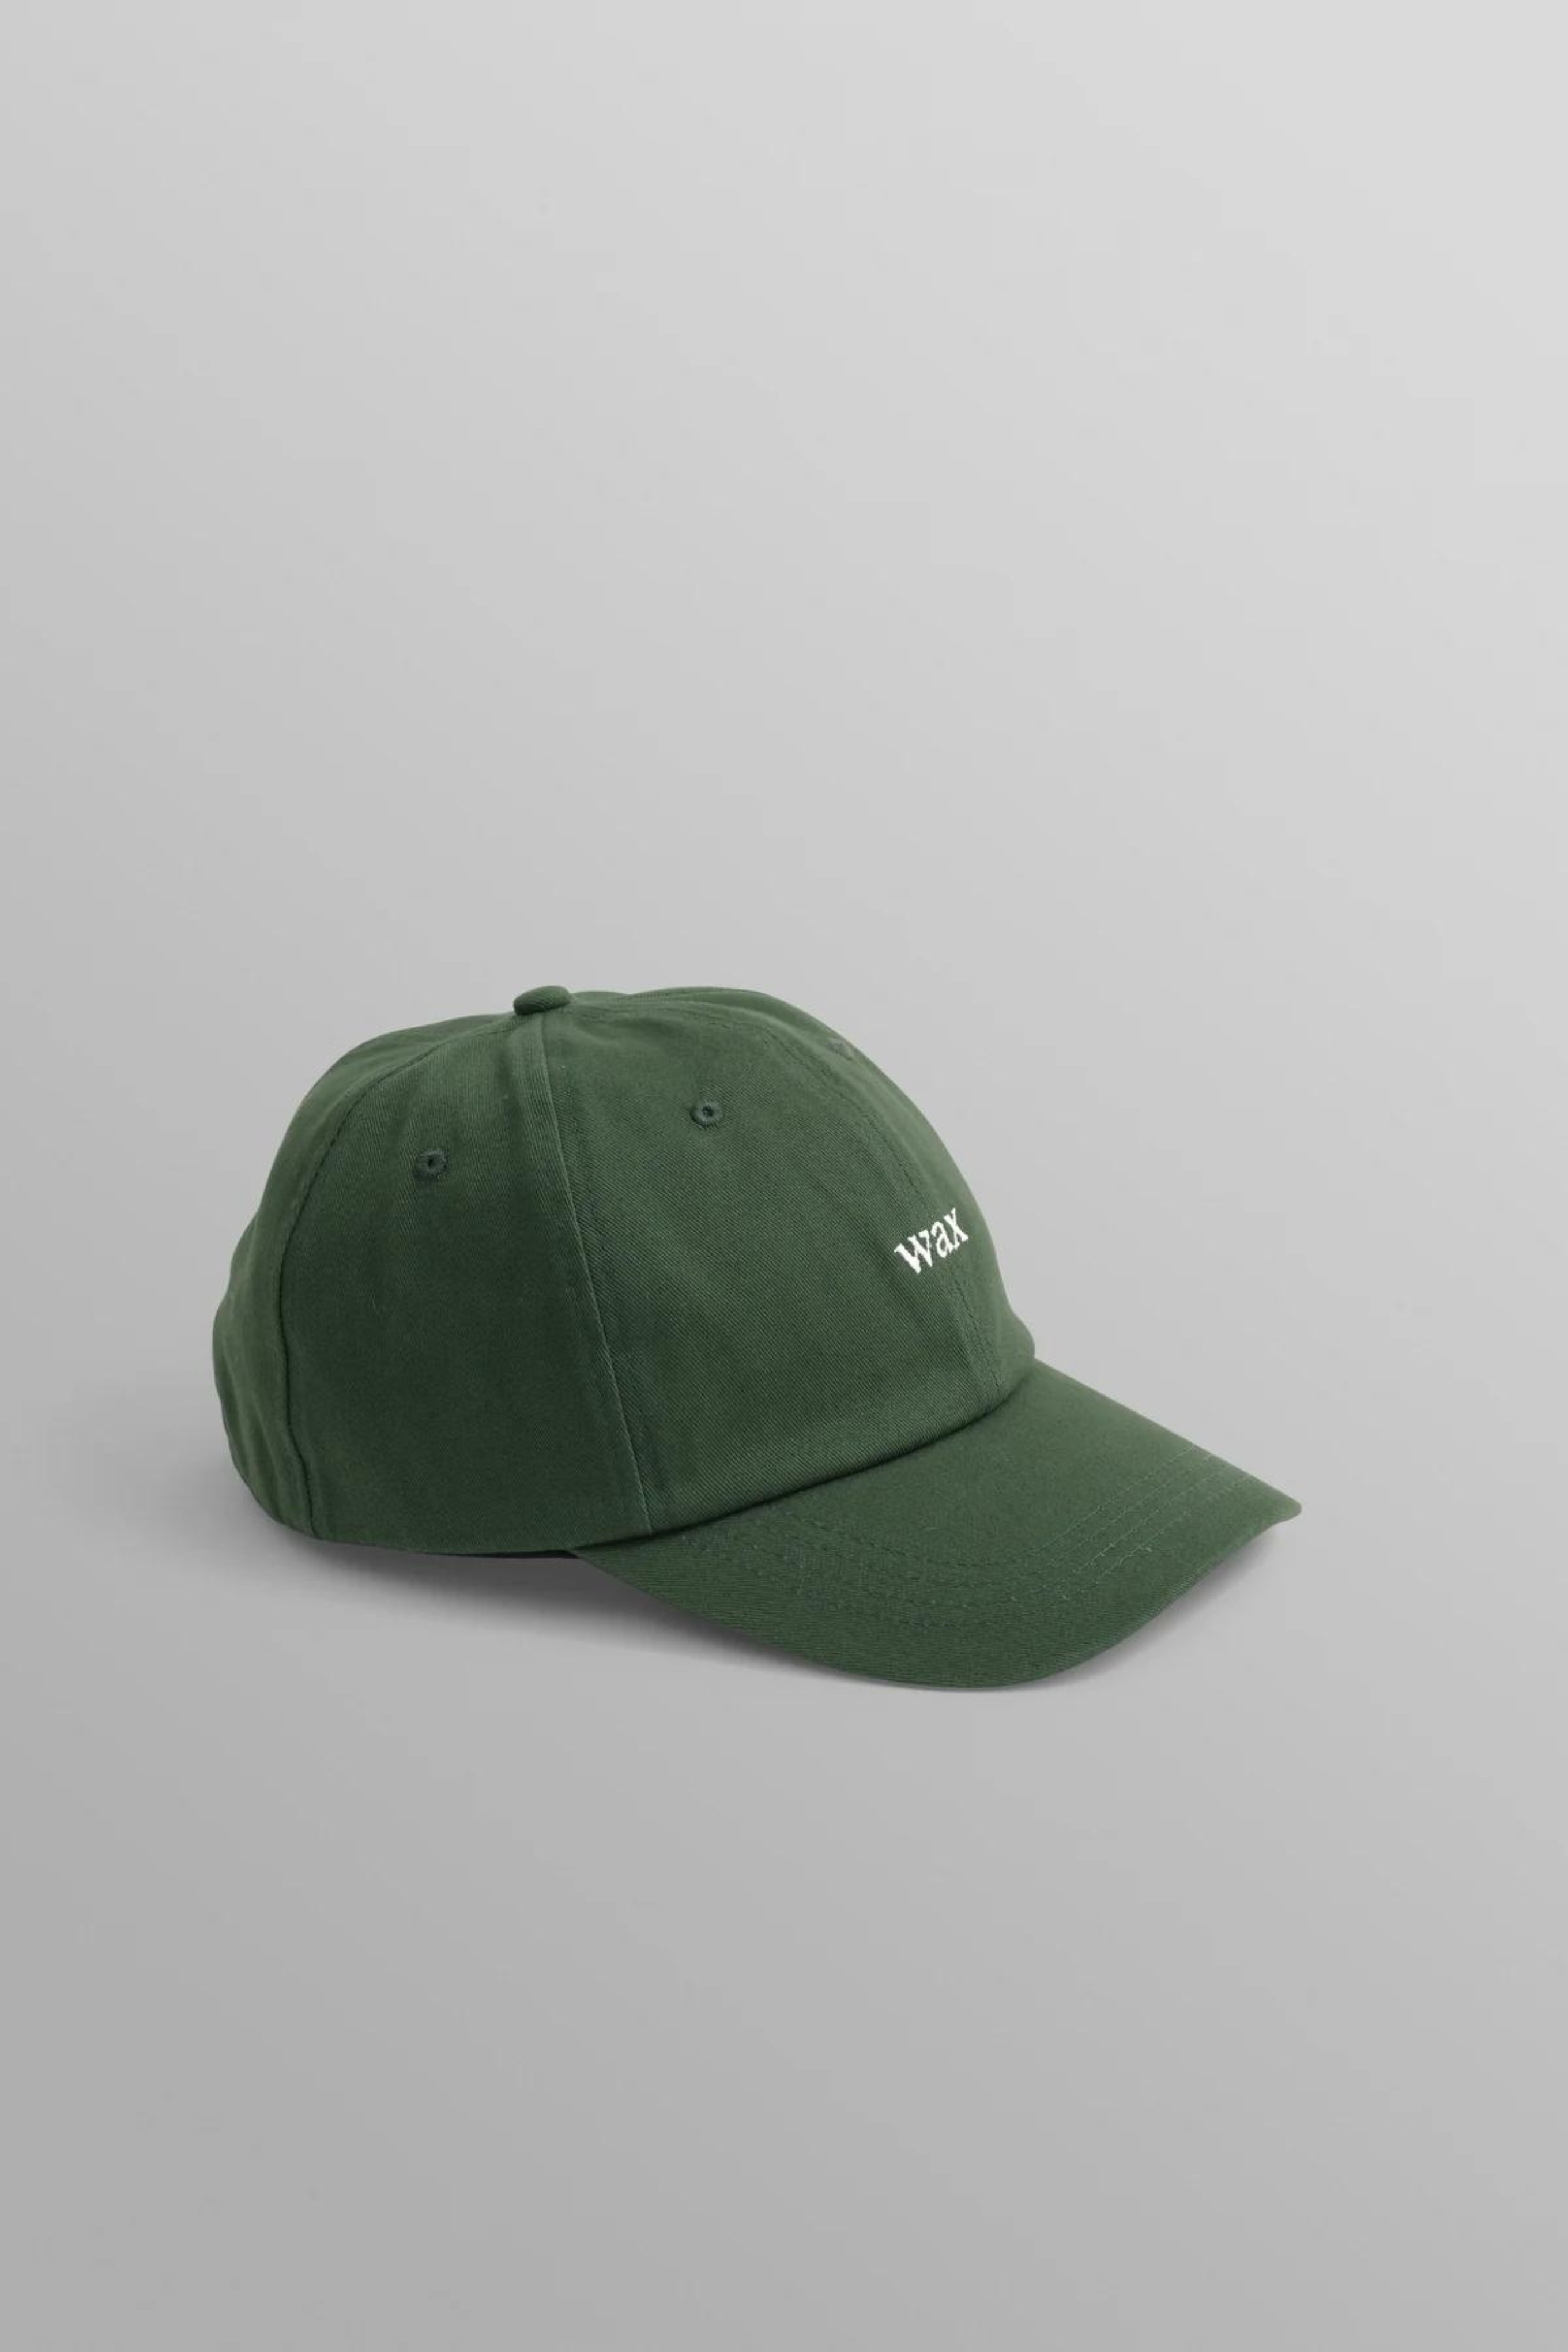 SPORTS CAP - GREEN